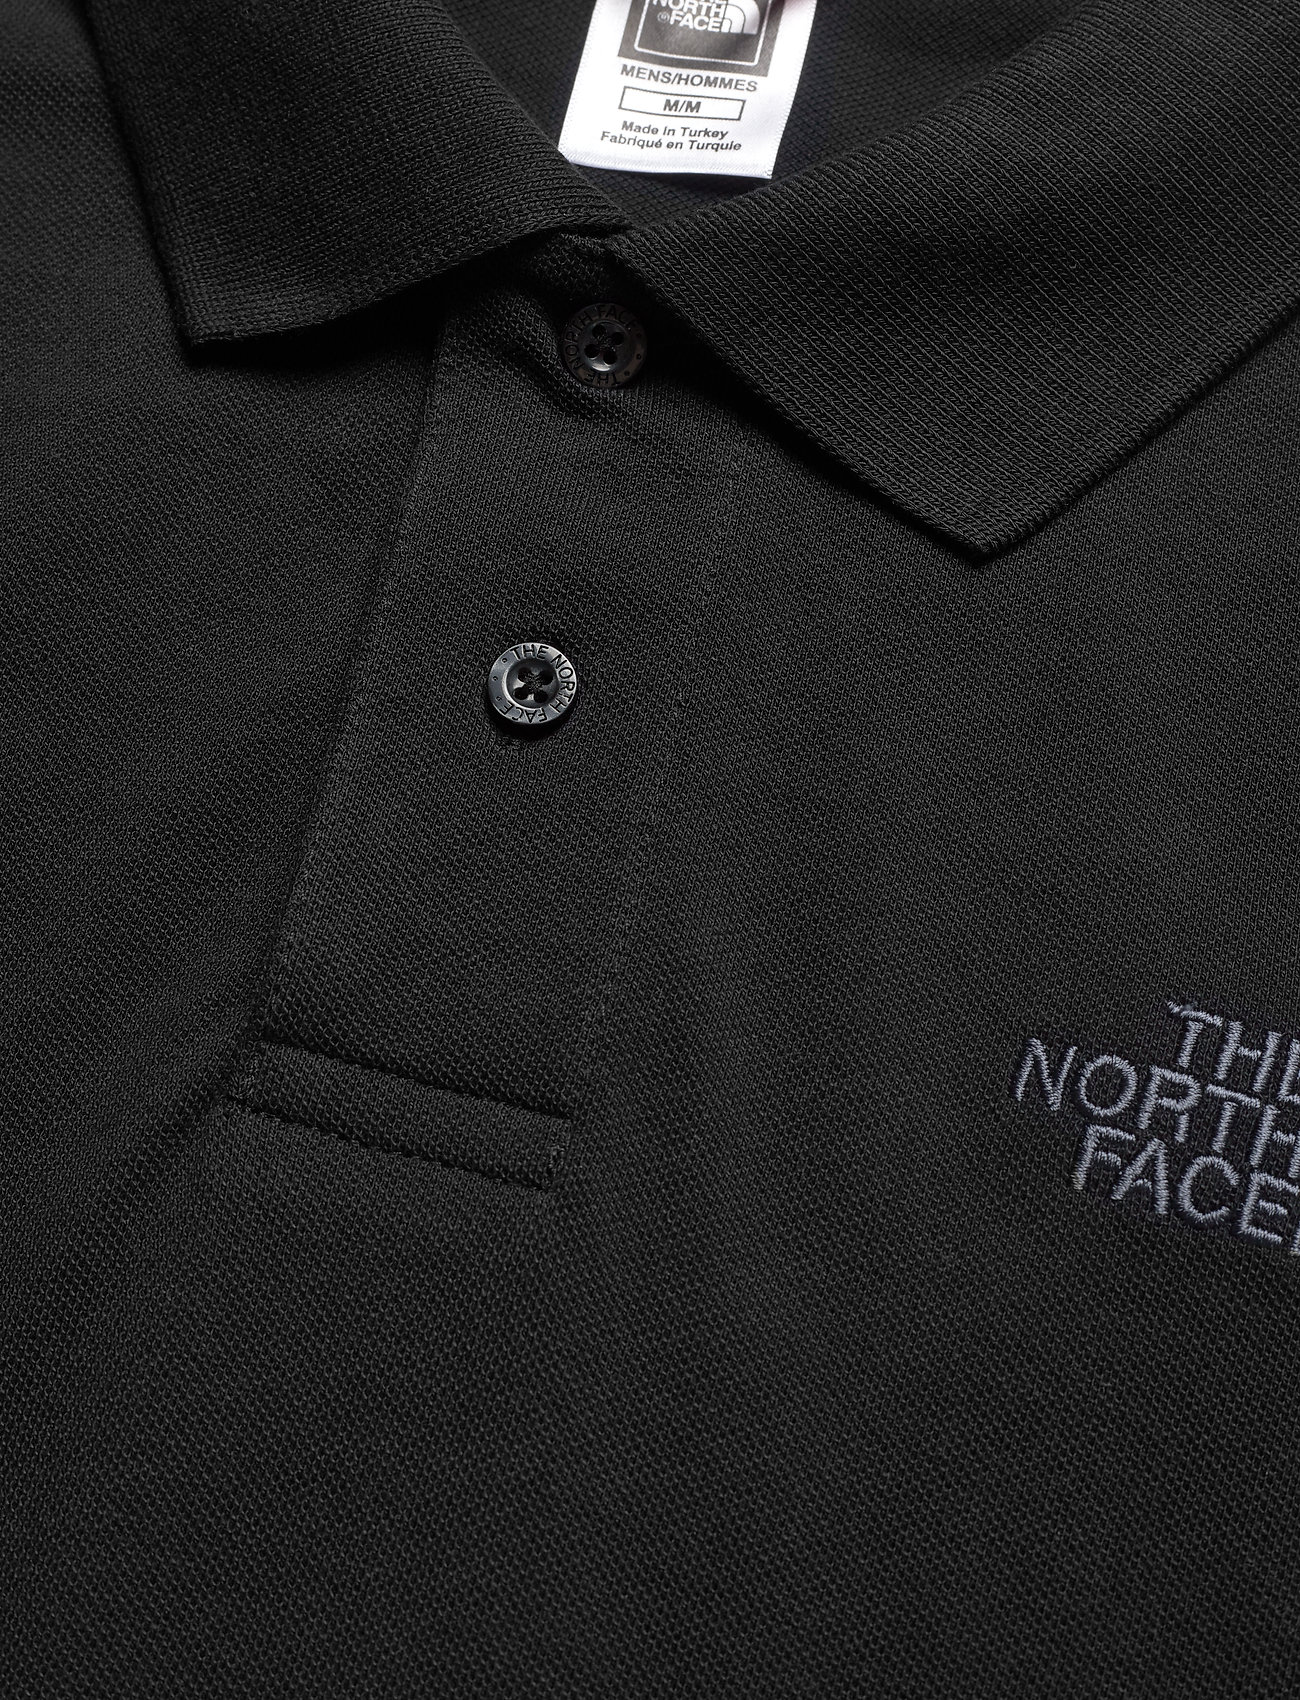 north face white polo shirt